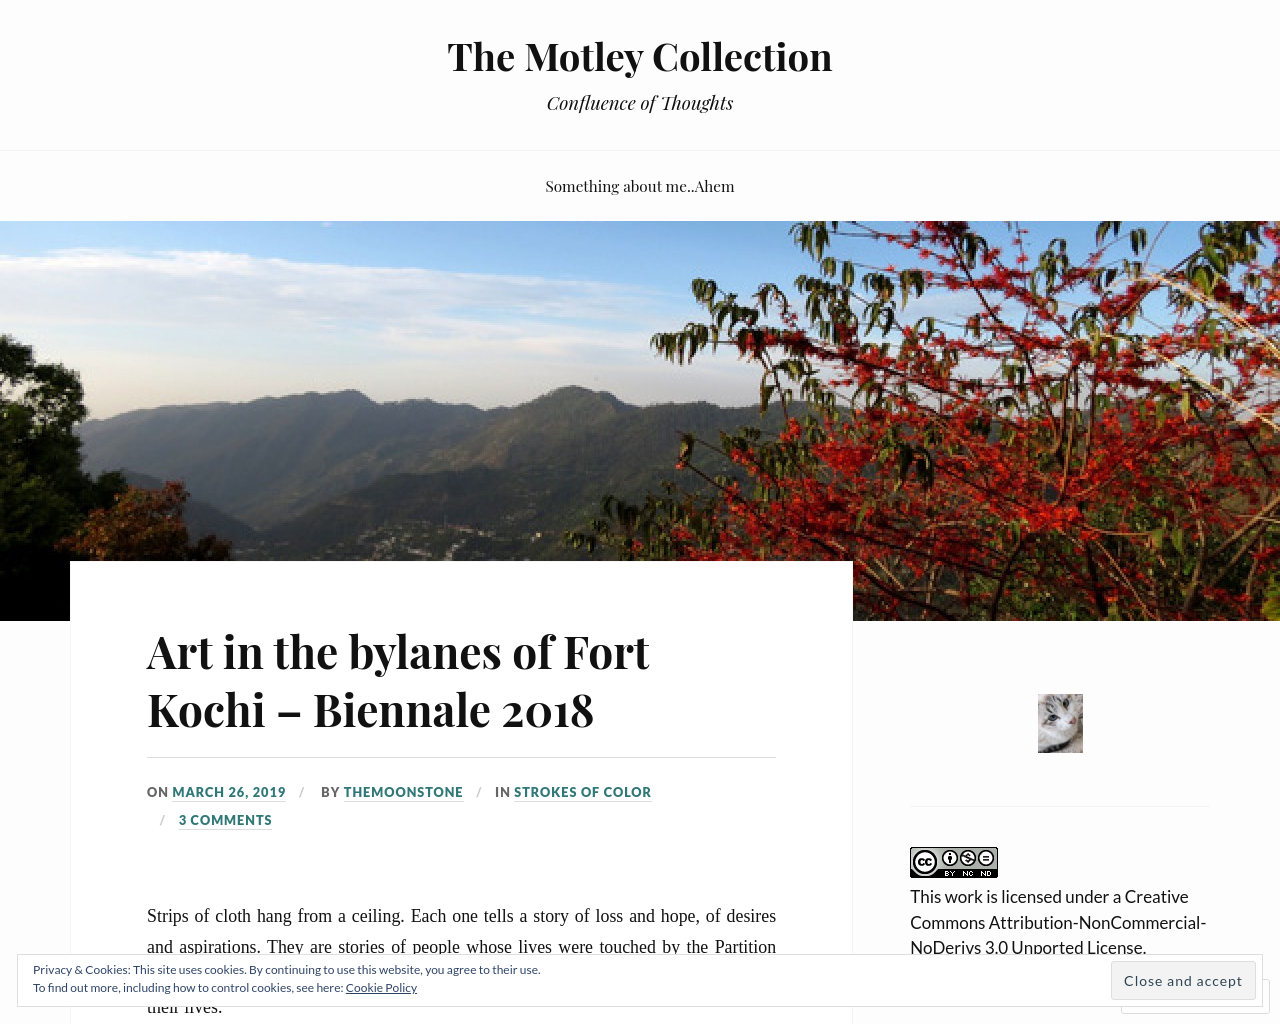 The Motley Collection